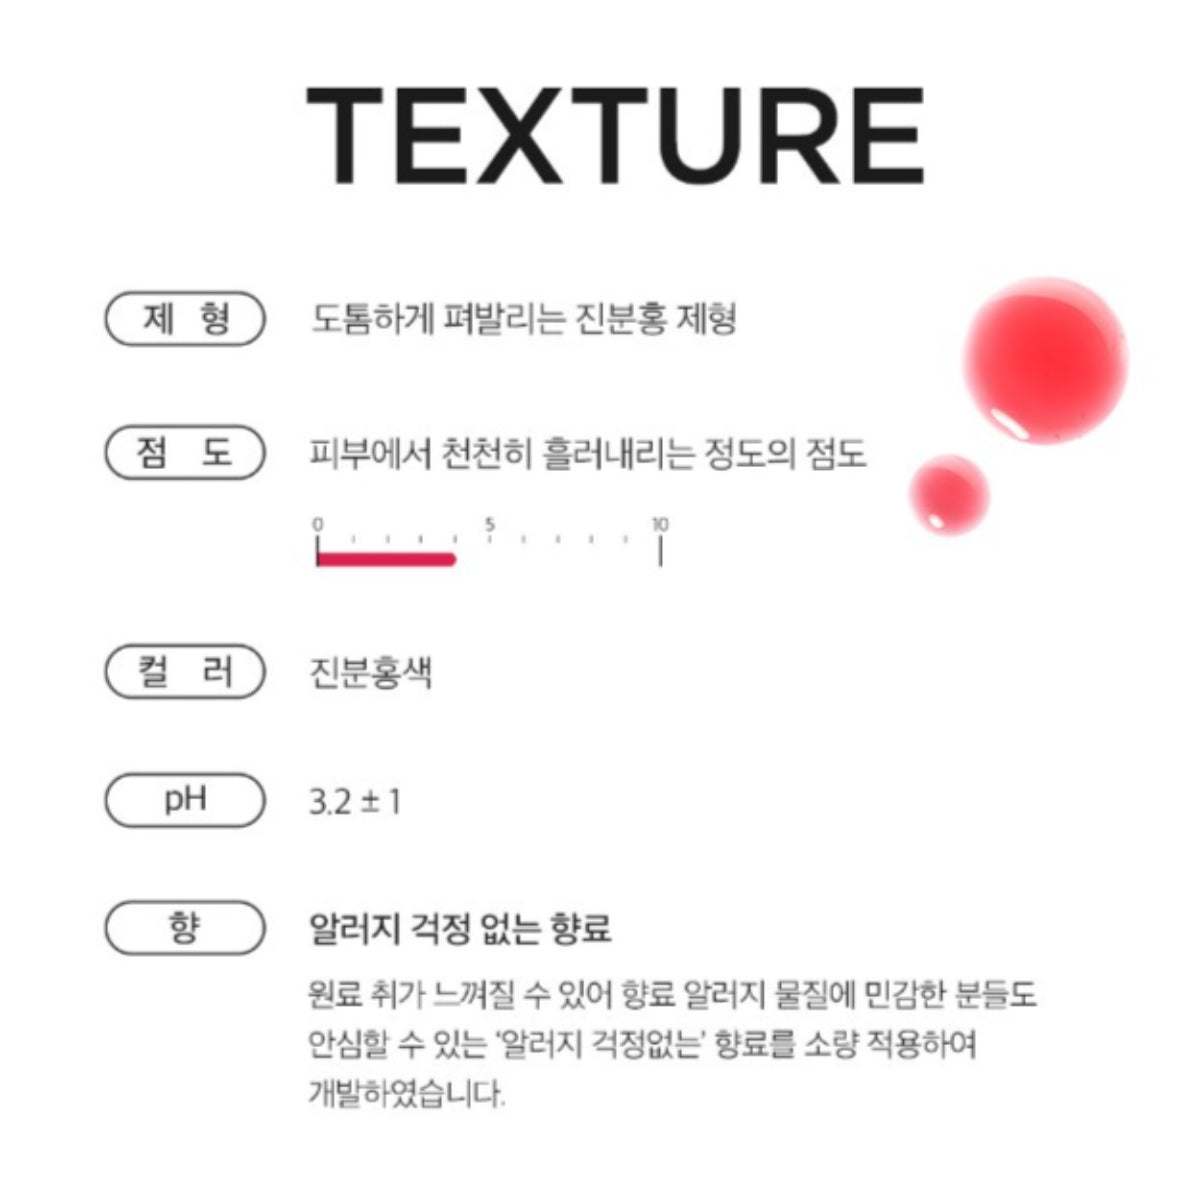 DERMA FACTORY Red Acne Peel Serum 30ml/bottle Home Peeling AHA Exfoliation Care Wash-off Peeling Treatment / from Seoul, Korea